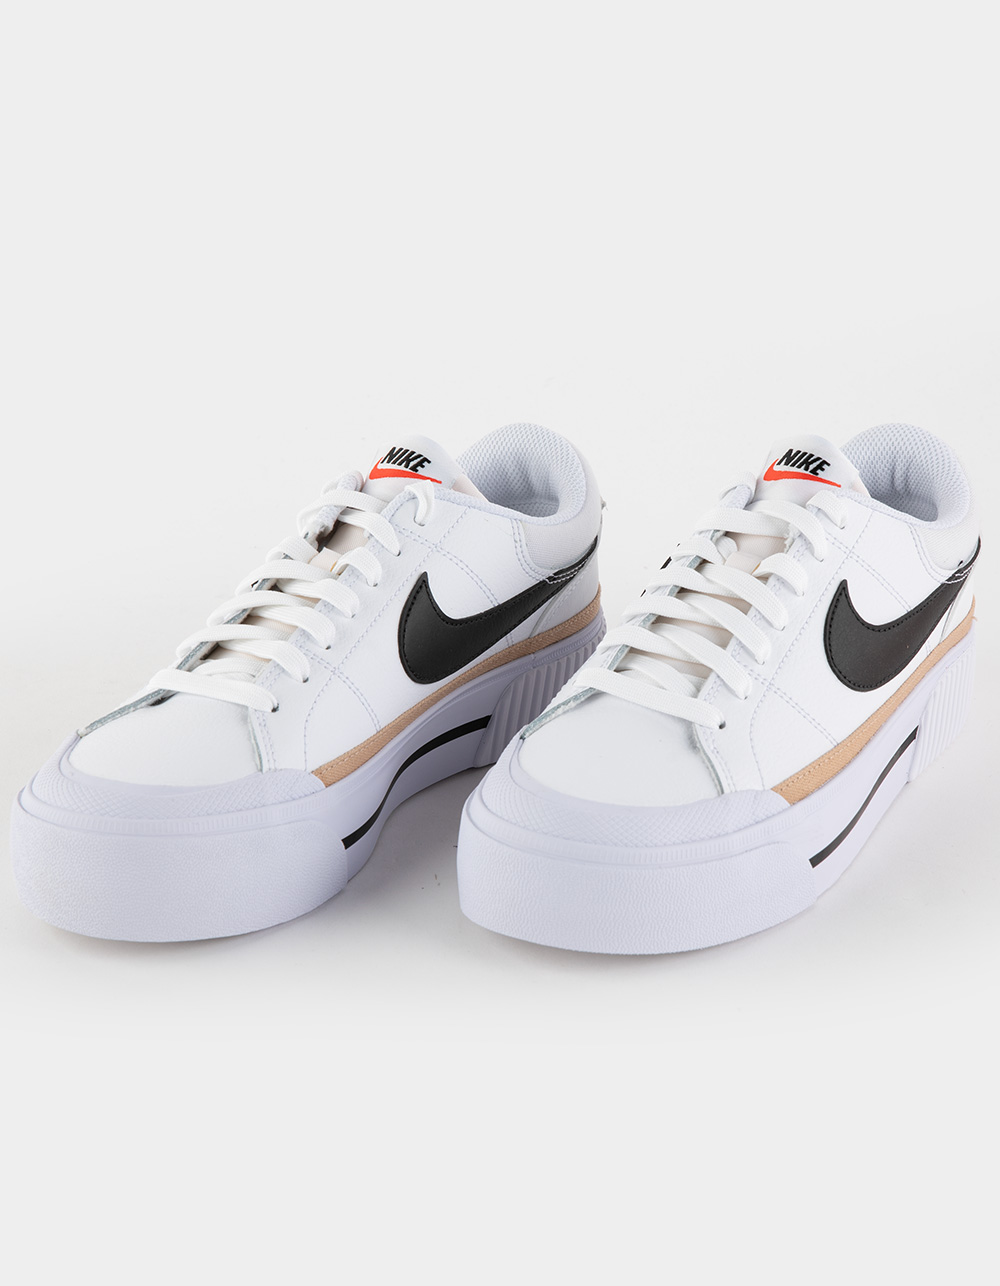 Nike Women's Court Legacy Lift Shoes, Size 7.5, White/Black/Orange